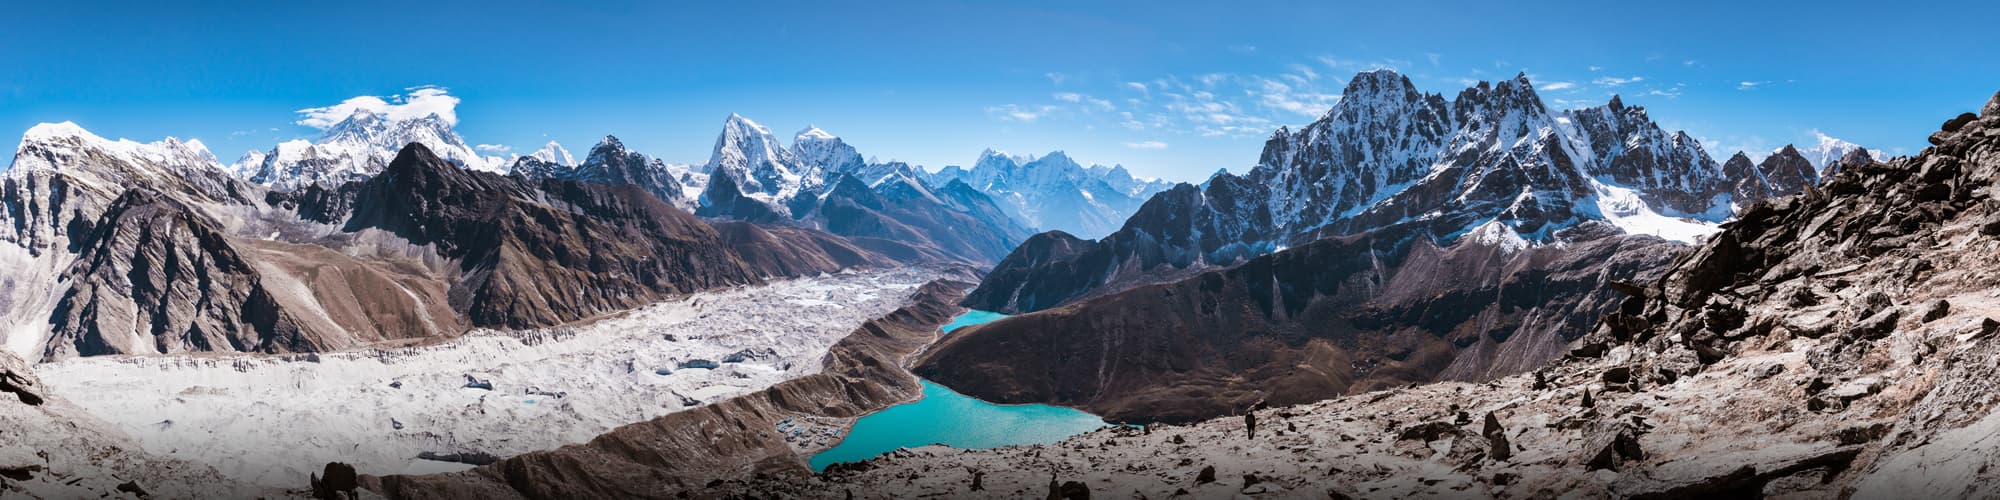 Voyage liberté Népal © Rmnunes / iStock